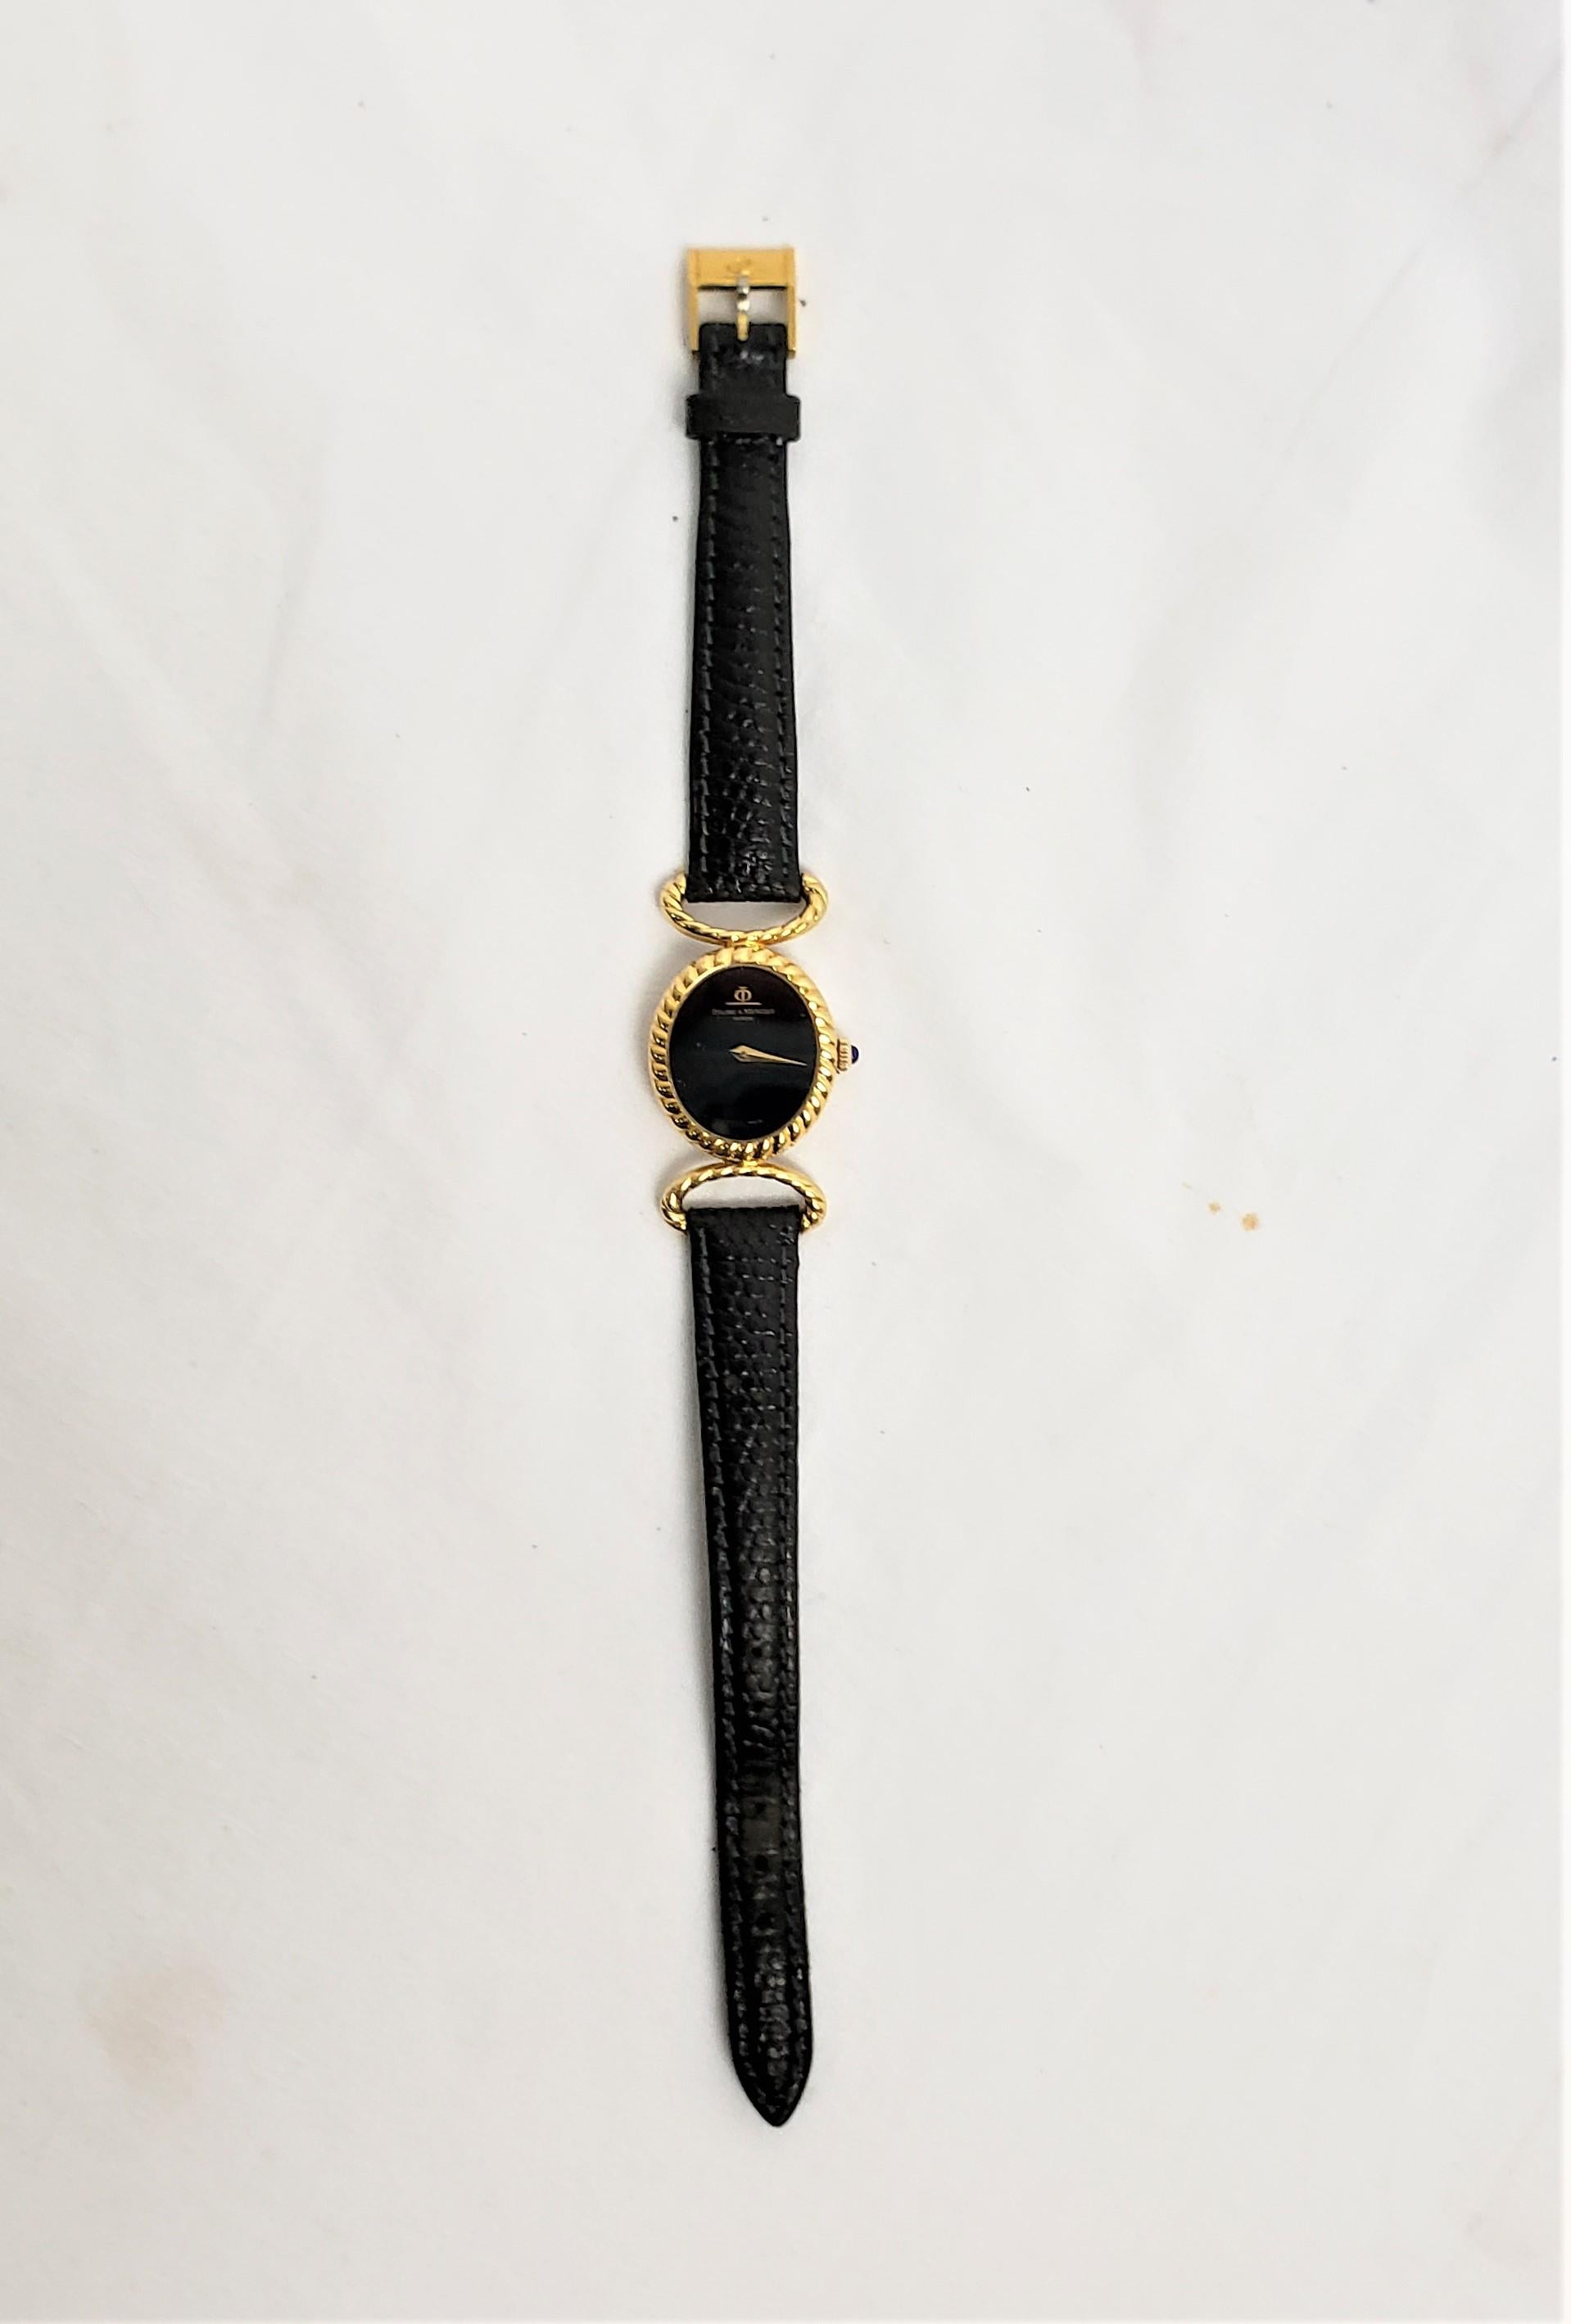 Machine-Made Baume Mercier 18 Karat Yellow Gold Ladies Wristwatch with Original Leather Band For Sale